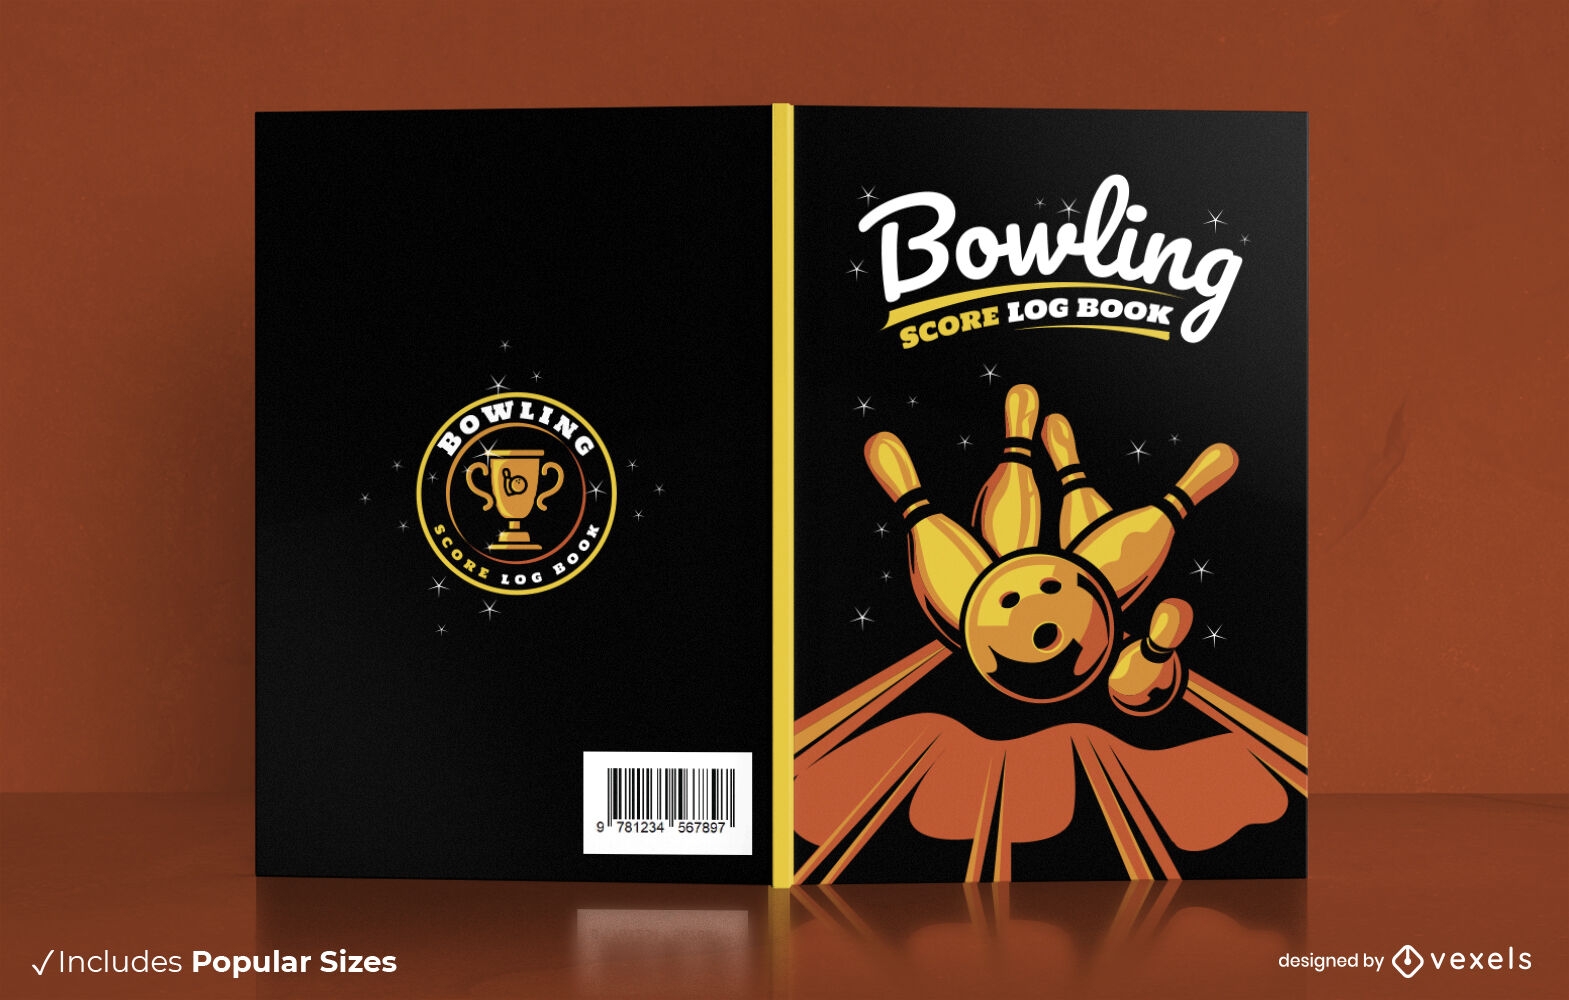 Bowling score log book cover design